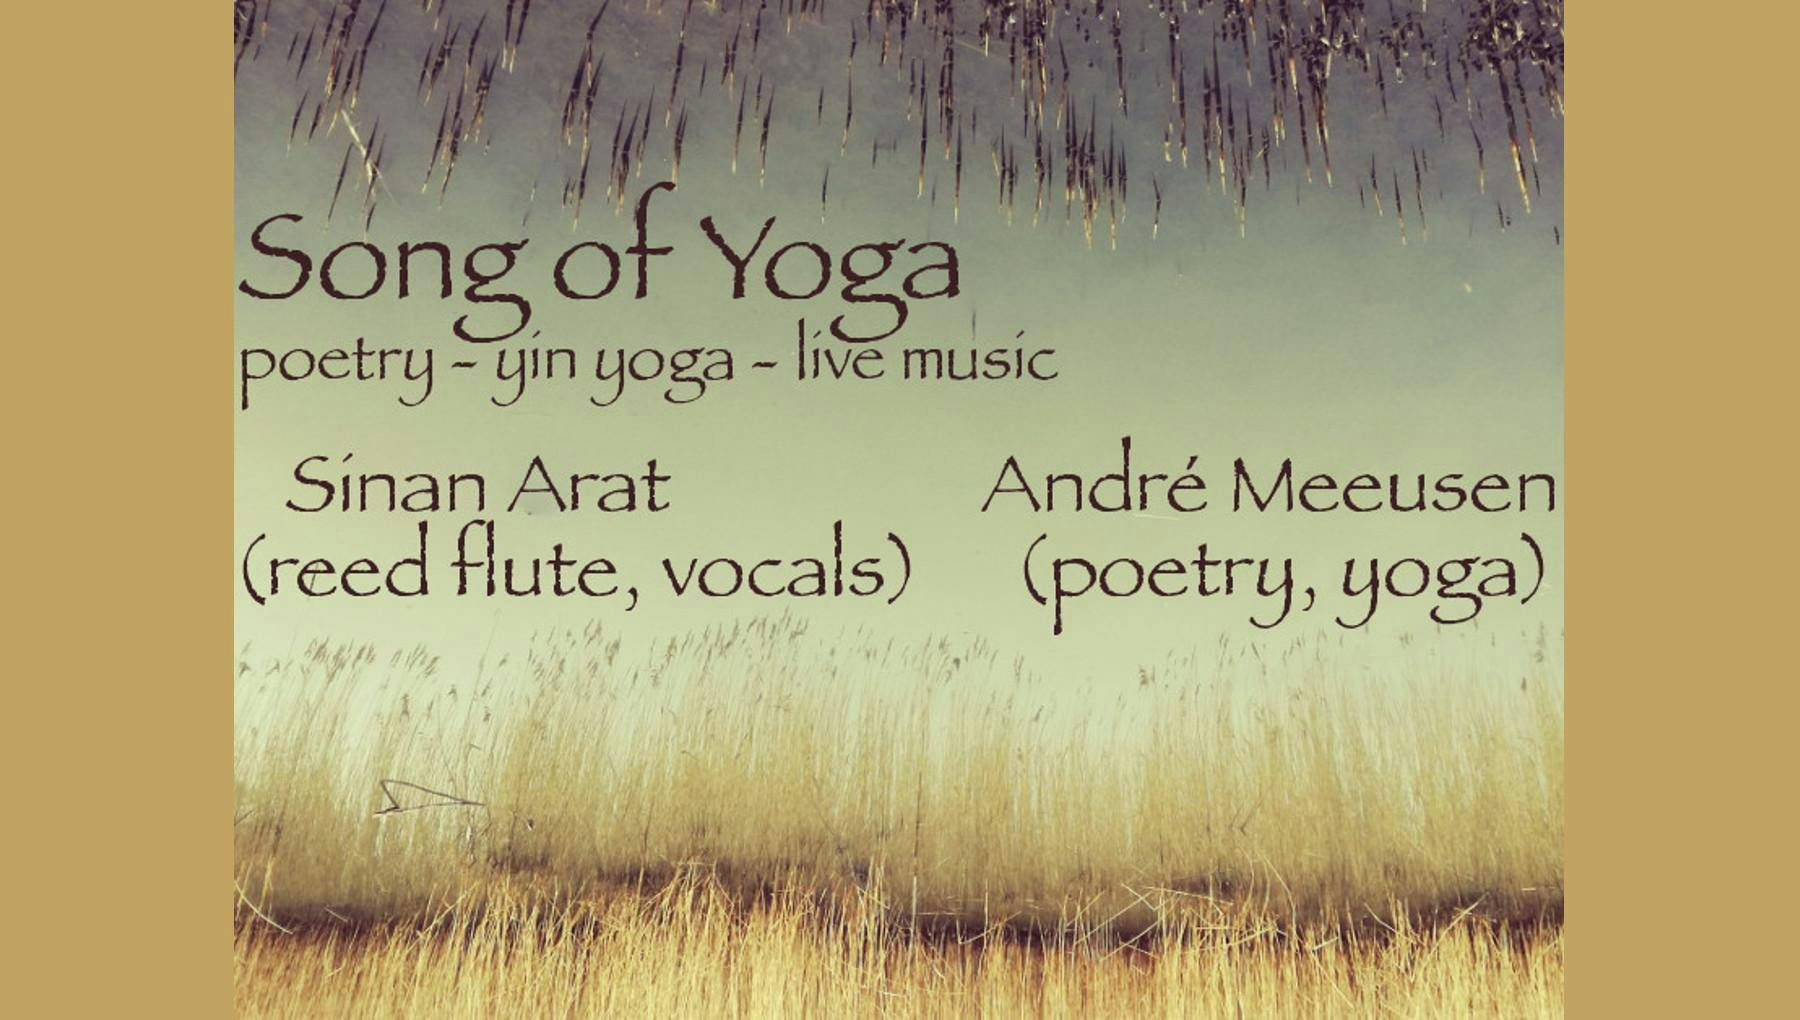 Yoga concert - live music, poetry & yin yoga with Sinan Arat